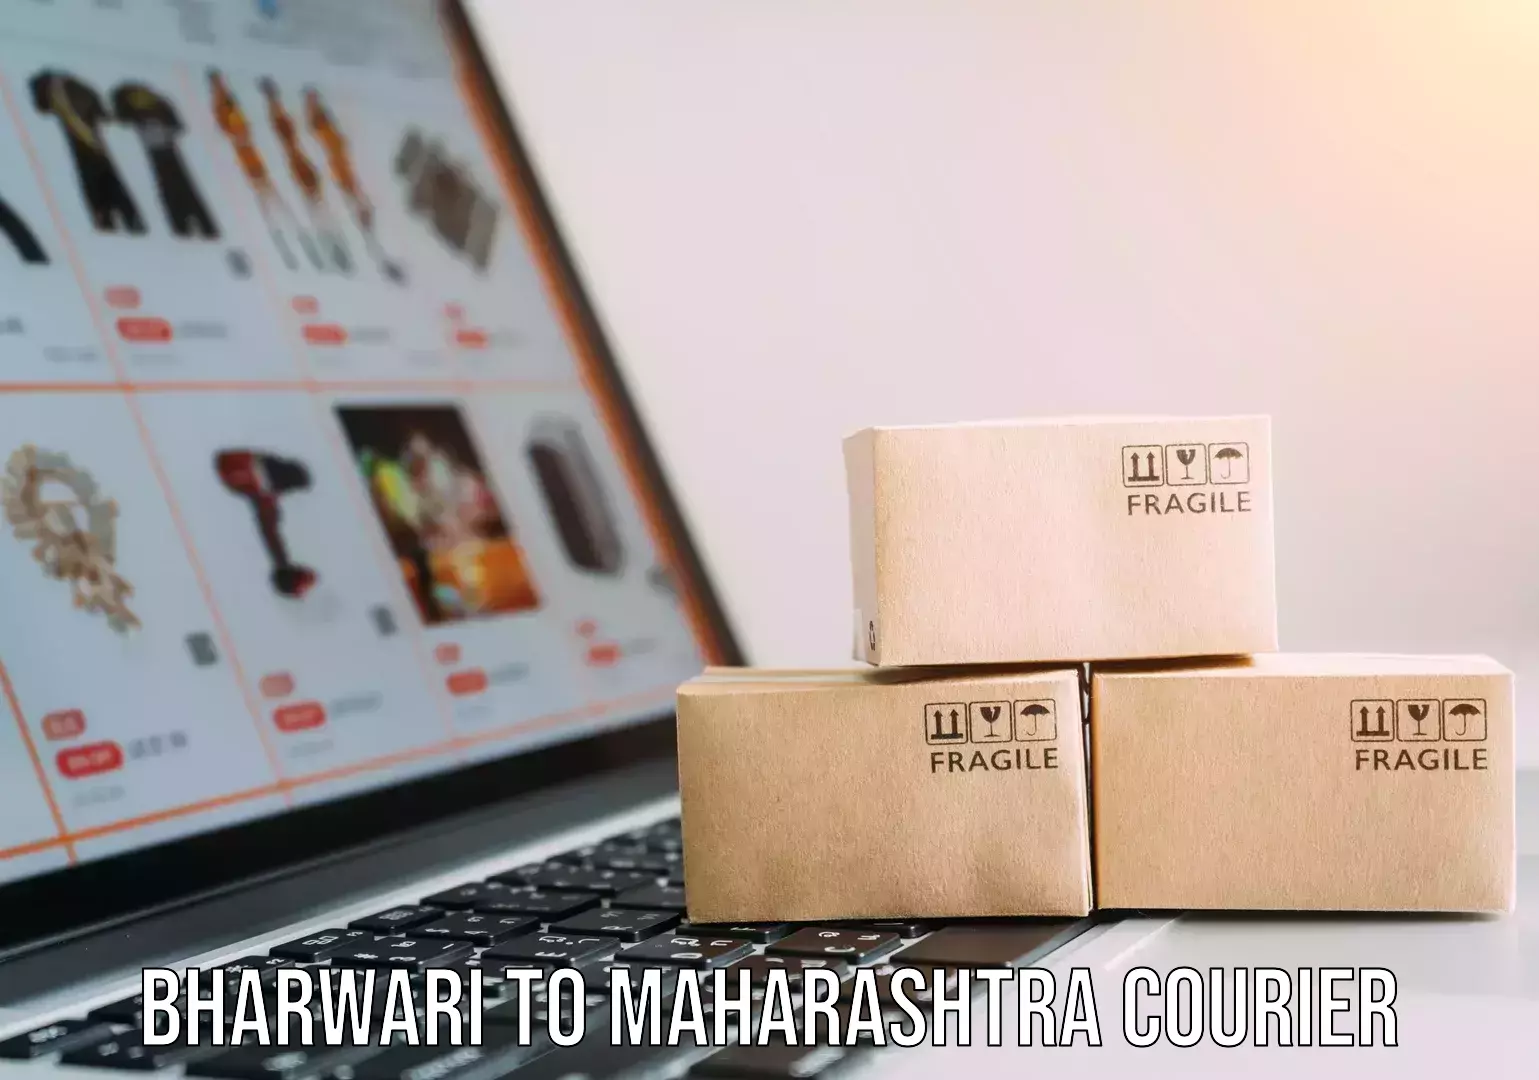 Global shipping networks Bharwari to Maharashtra